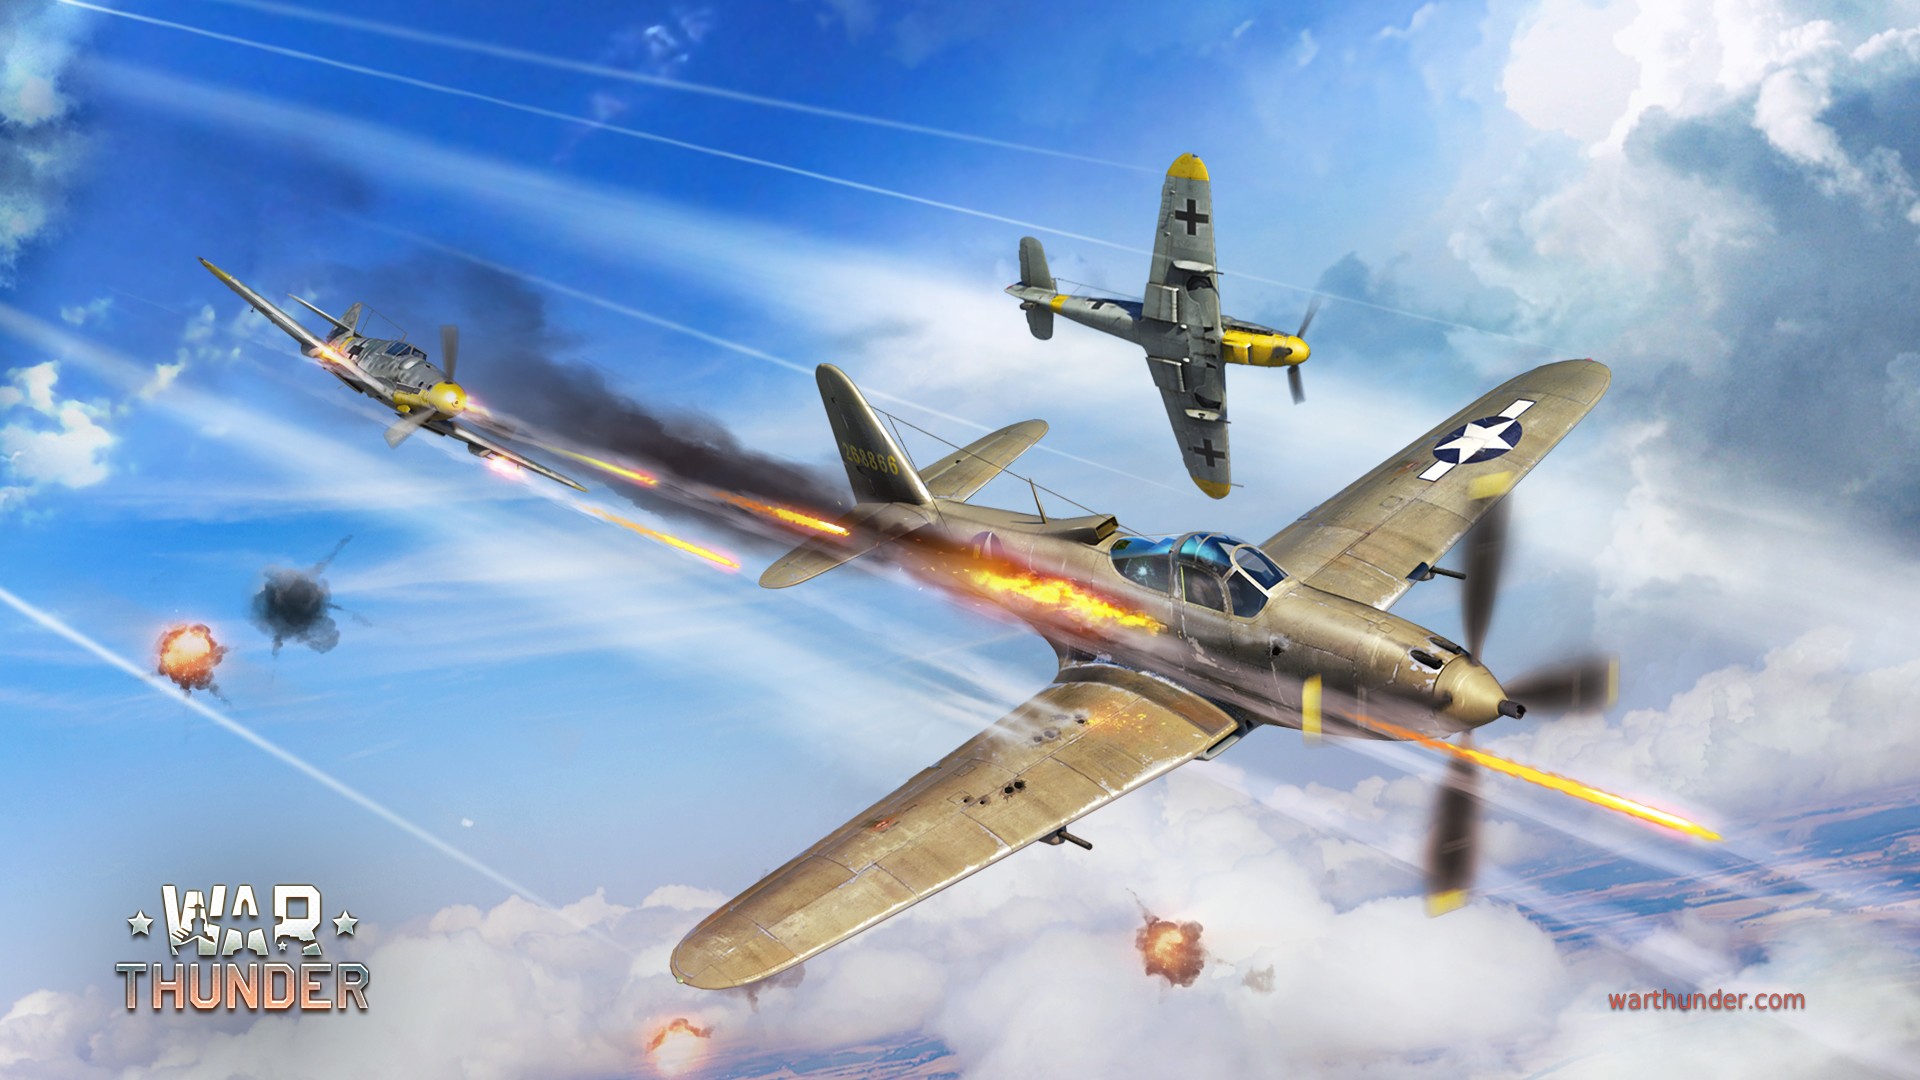 General 1920x1080 War Thunder airplane Gaijin Entertainment video games PC gaming military vehicle military aircraft aircraft vehicle military